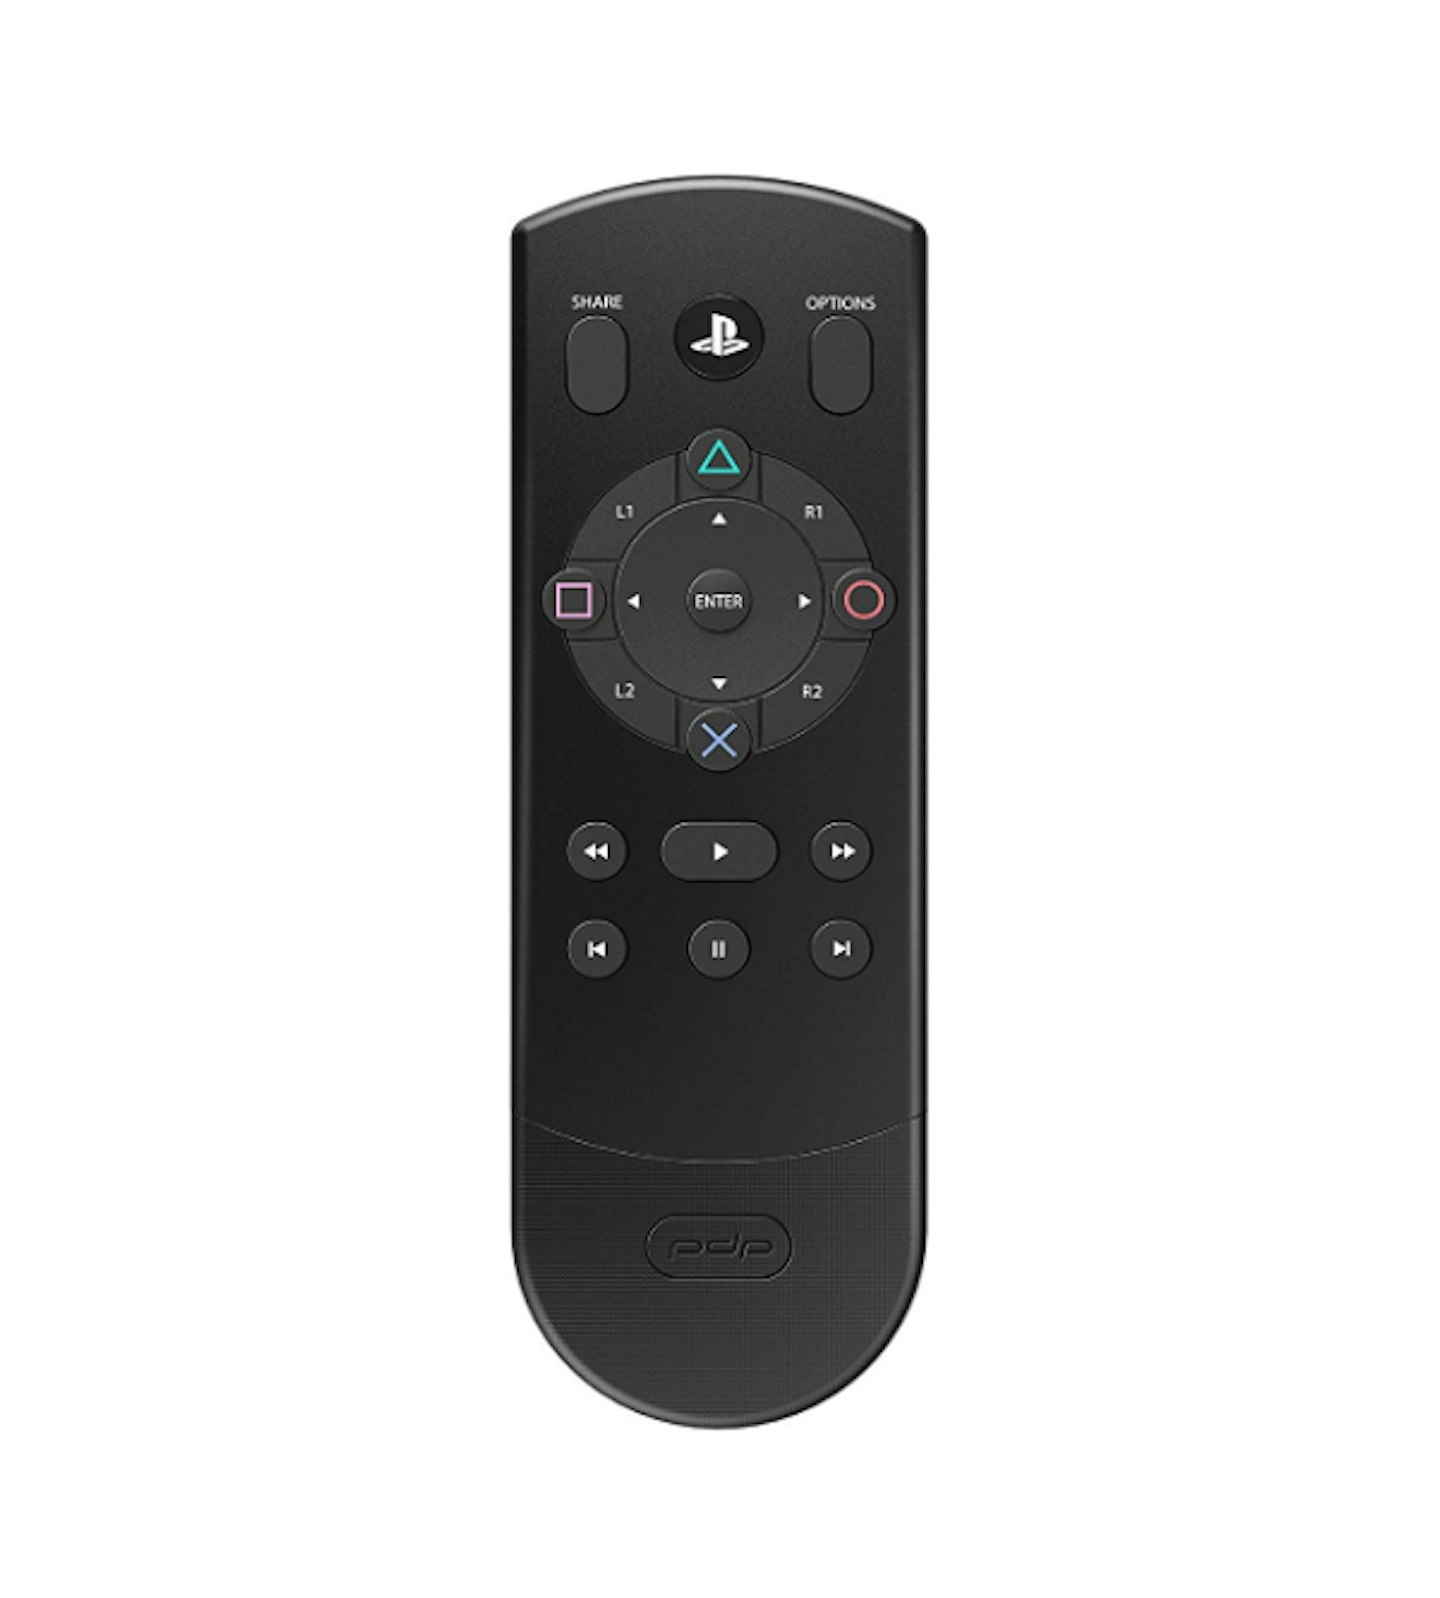 PDP Bluetooth Media Remote Control, £30.99